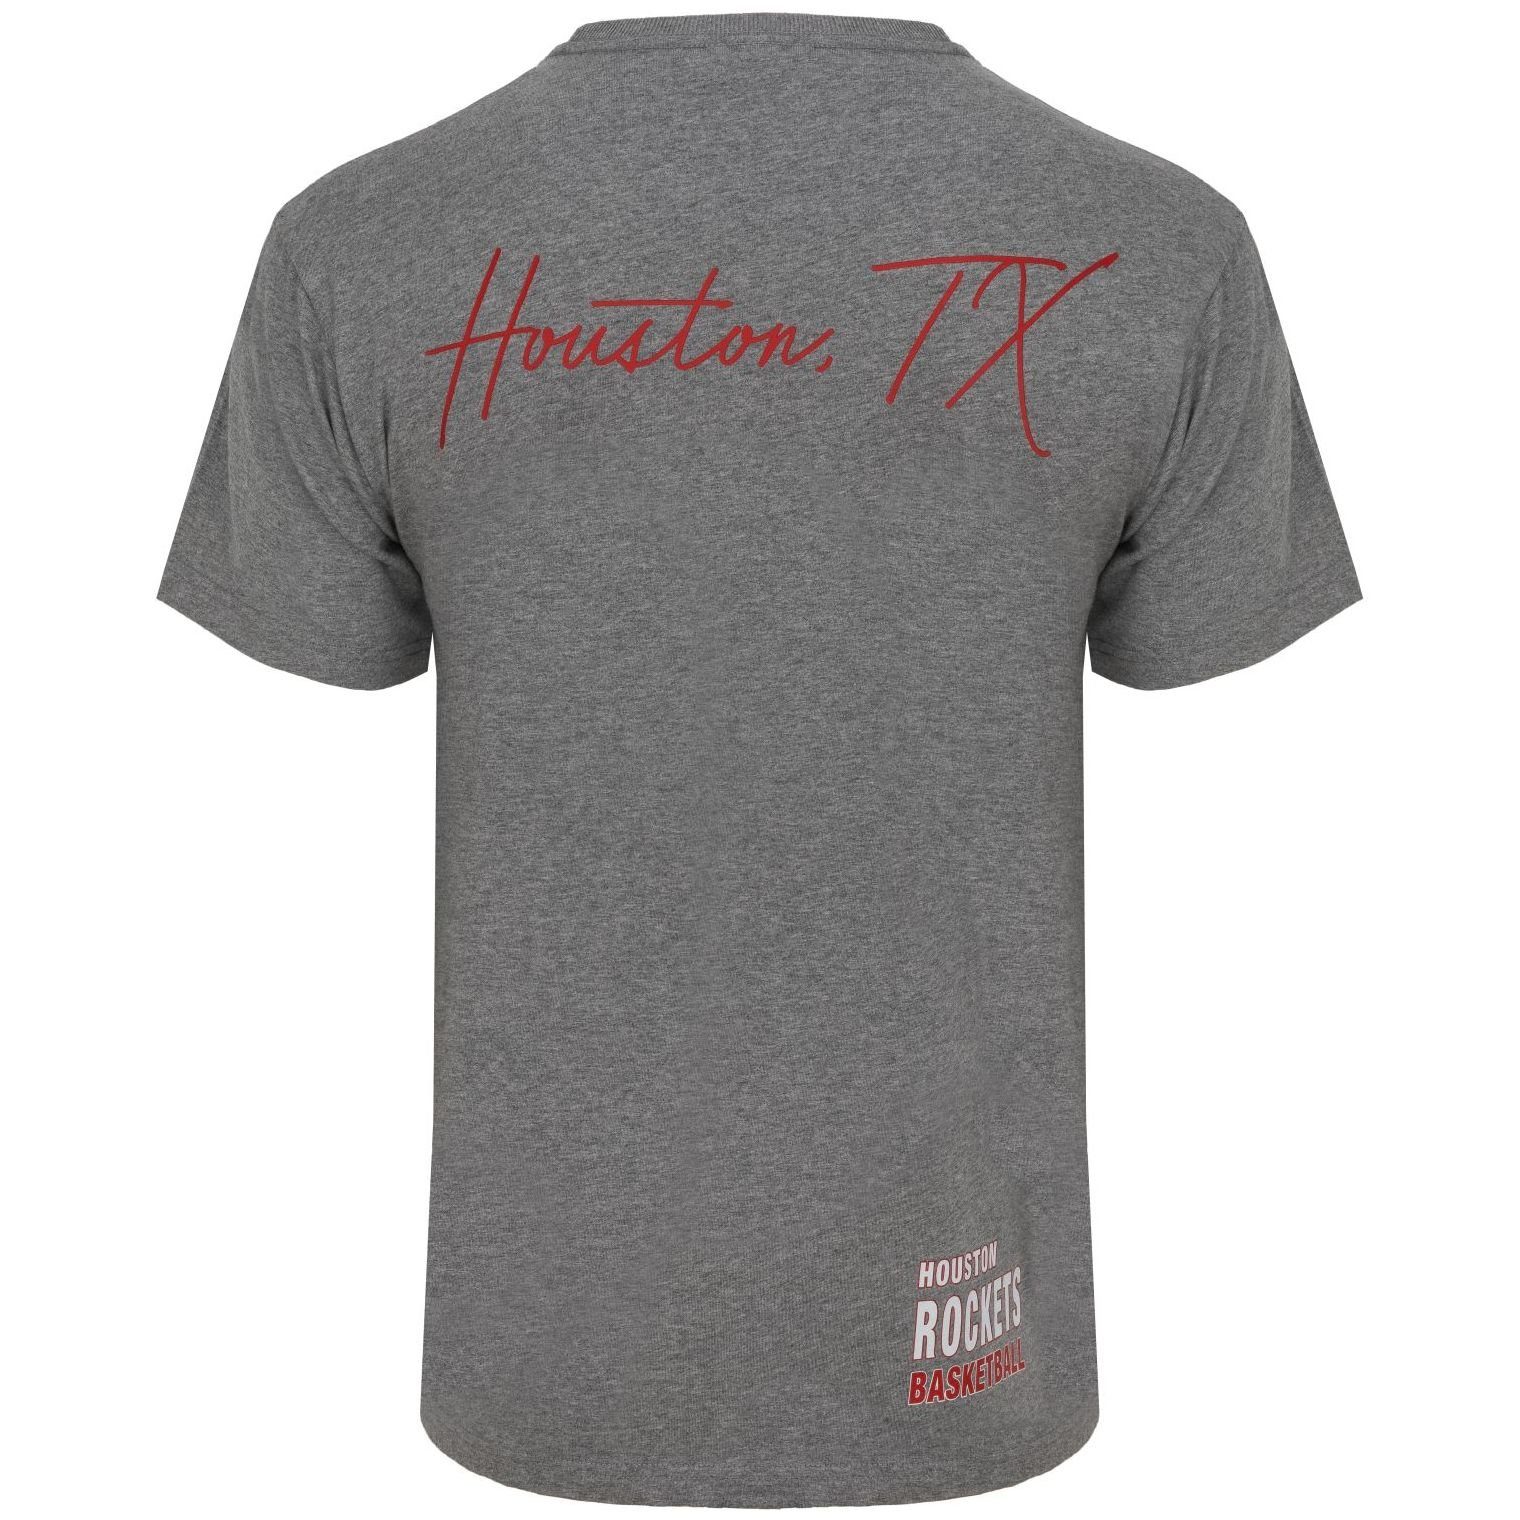 & CITY Ness Rockets HOMETOWN Print-Shirt Mitchell Houston